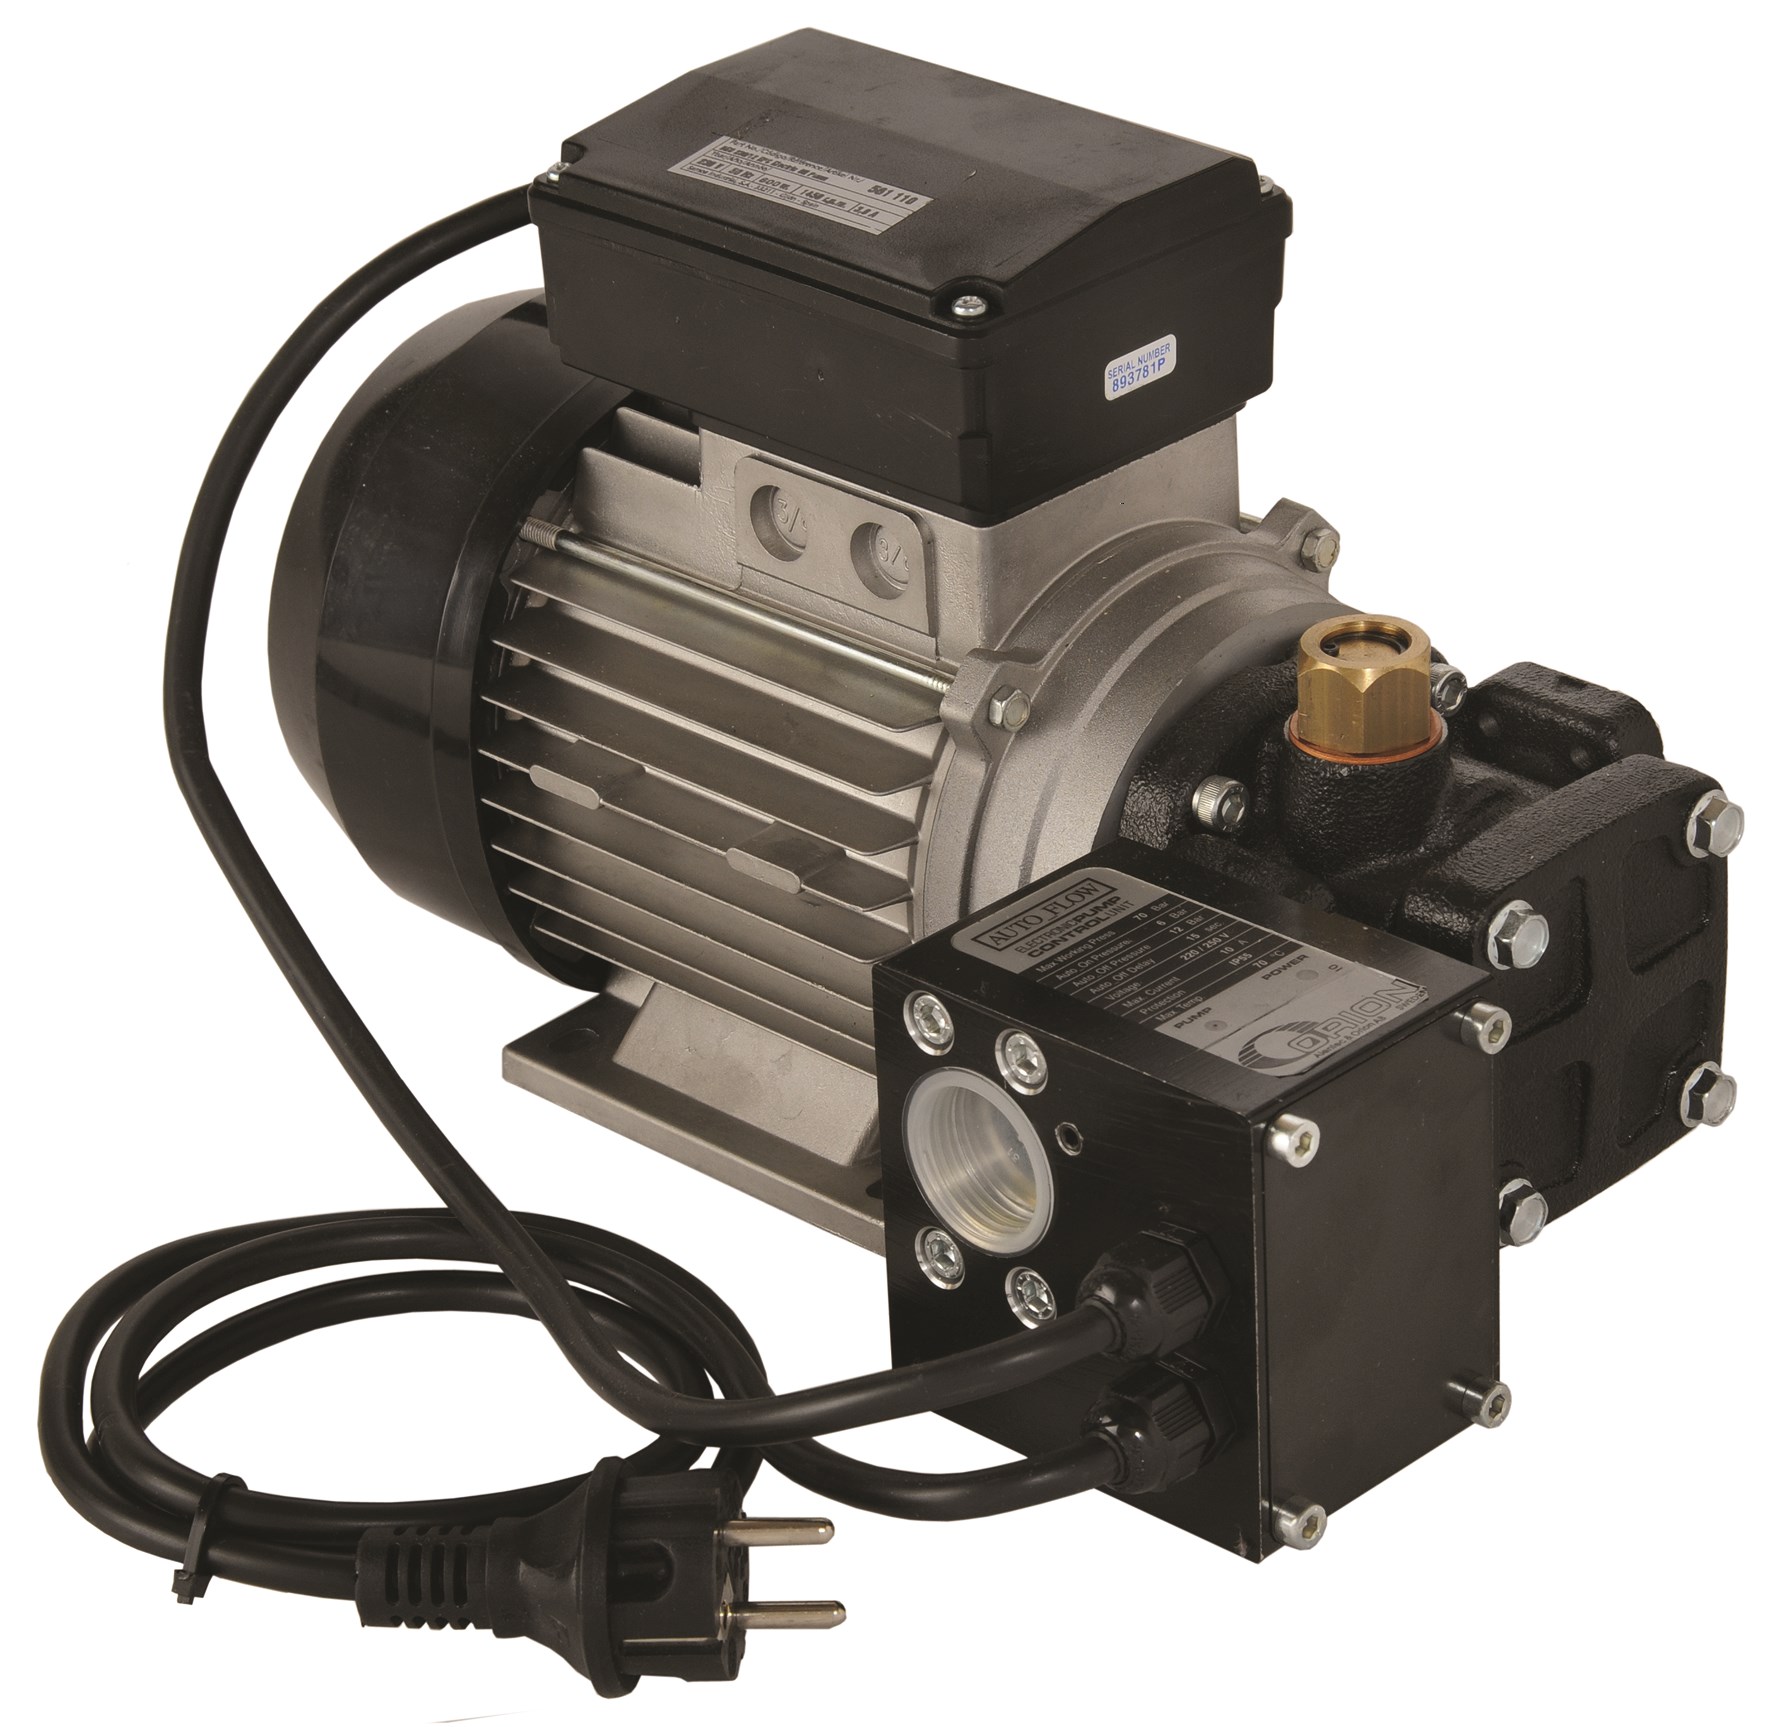 Oil pump, electric 230V 9.5L / min oil pressure switch - Alentec & Orion AB